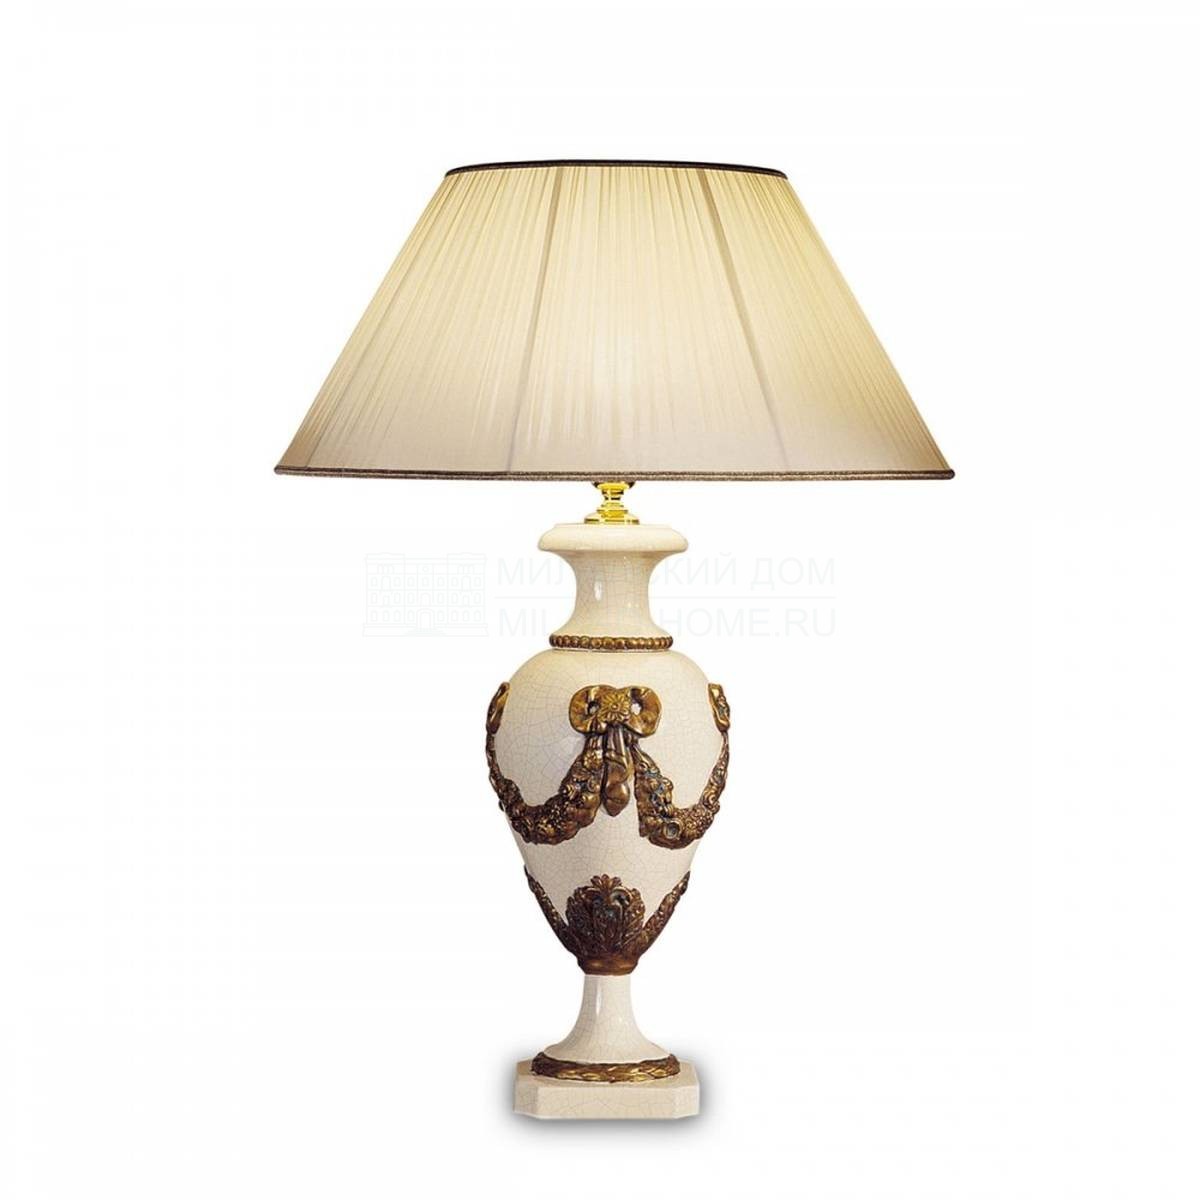 Настольная лампа Lucilla table lamp with festoons из Италии фабрики MARIONI